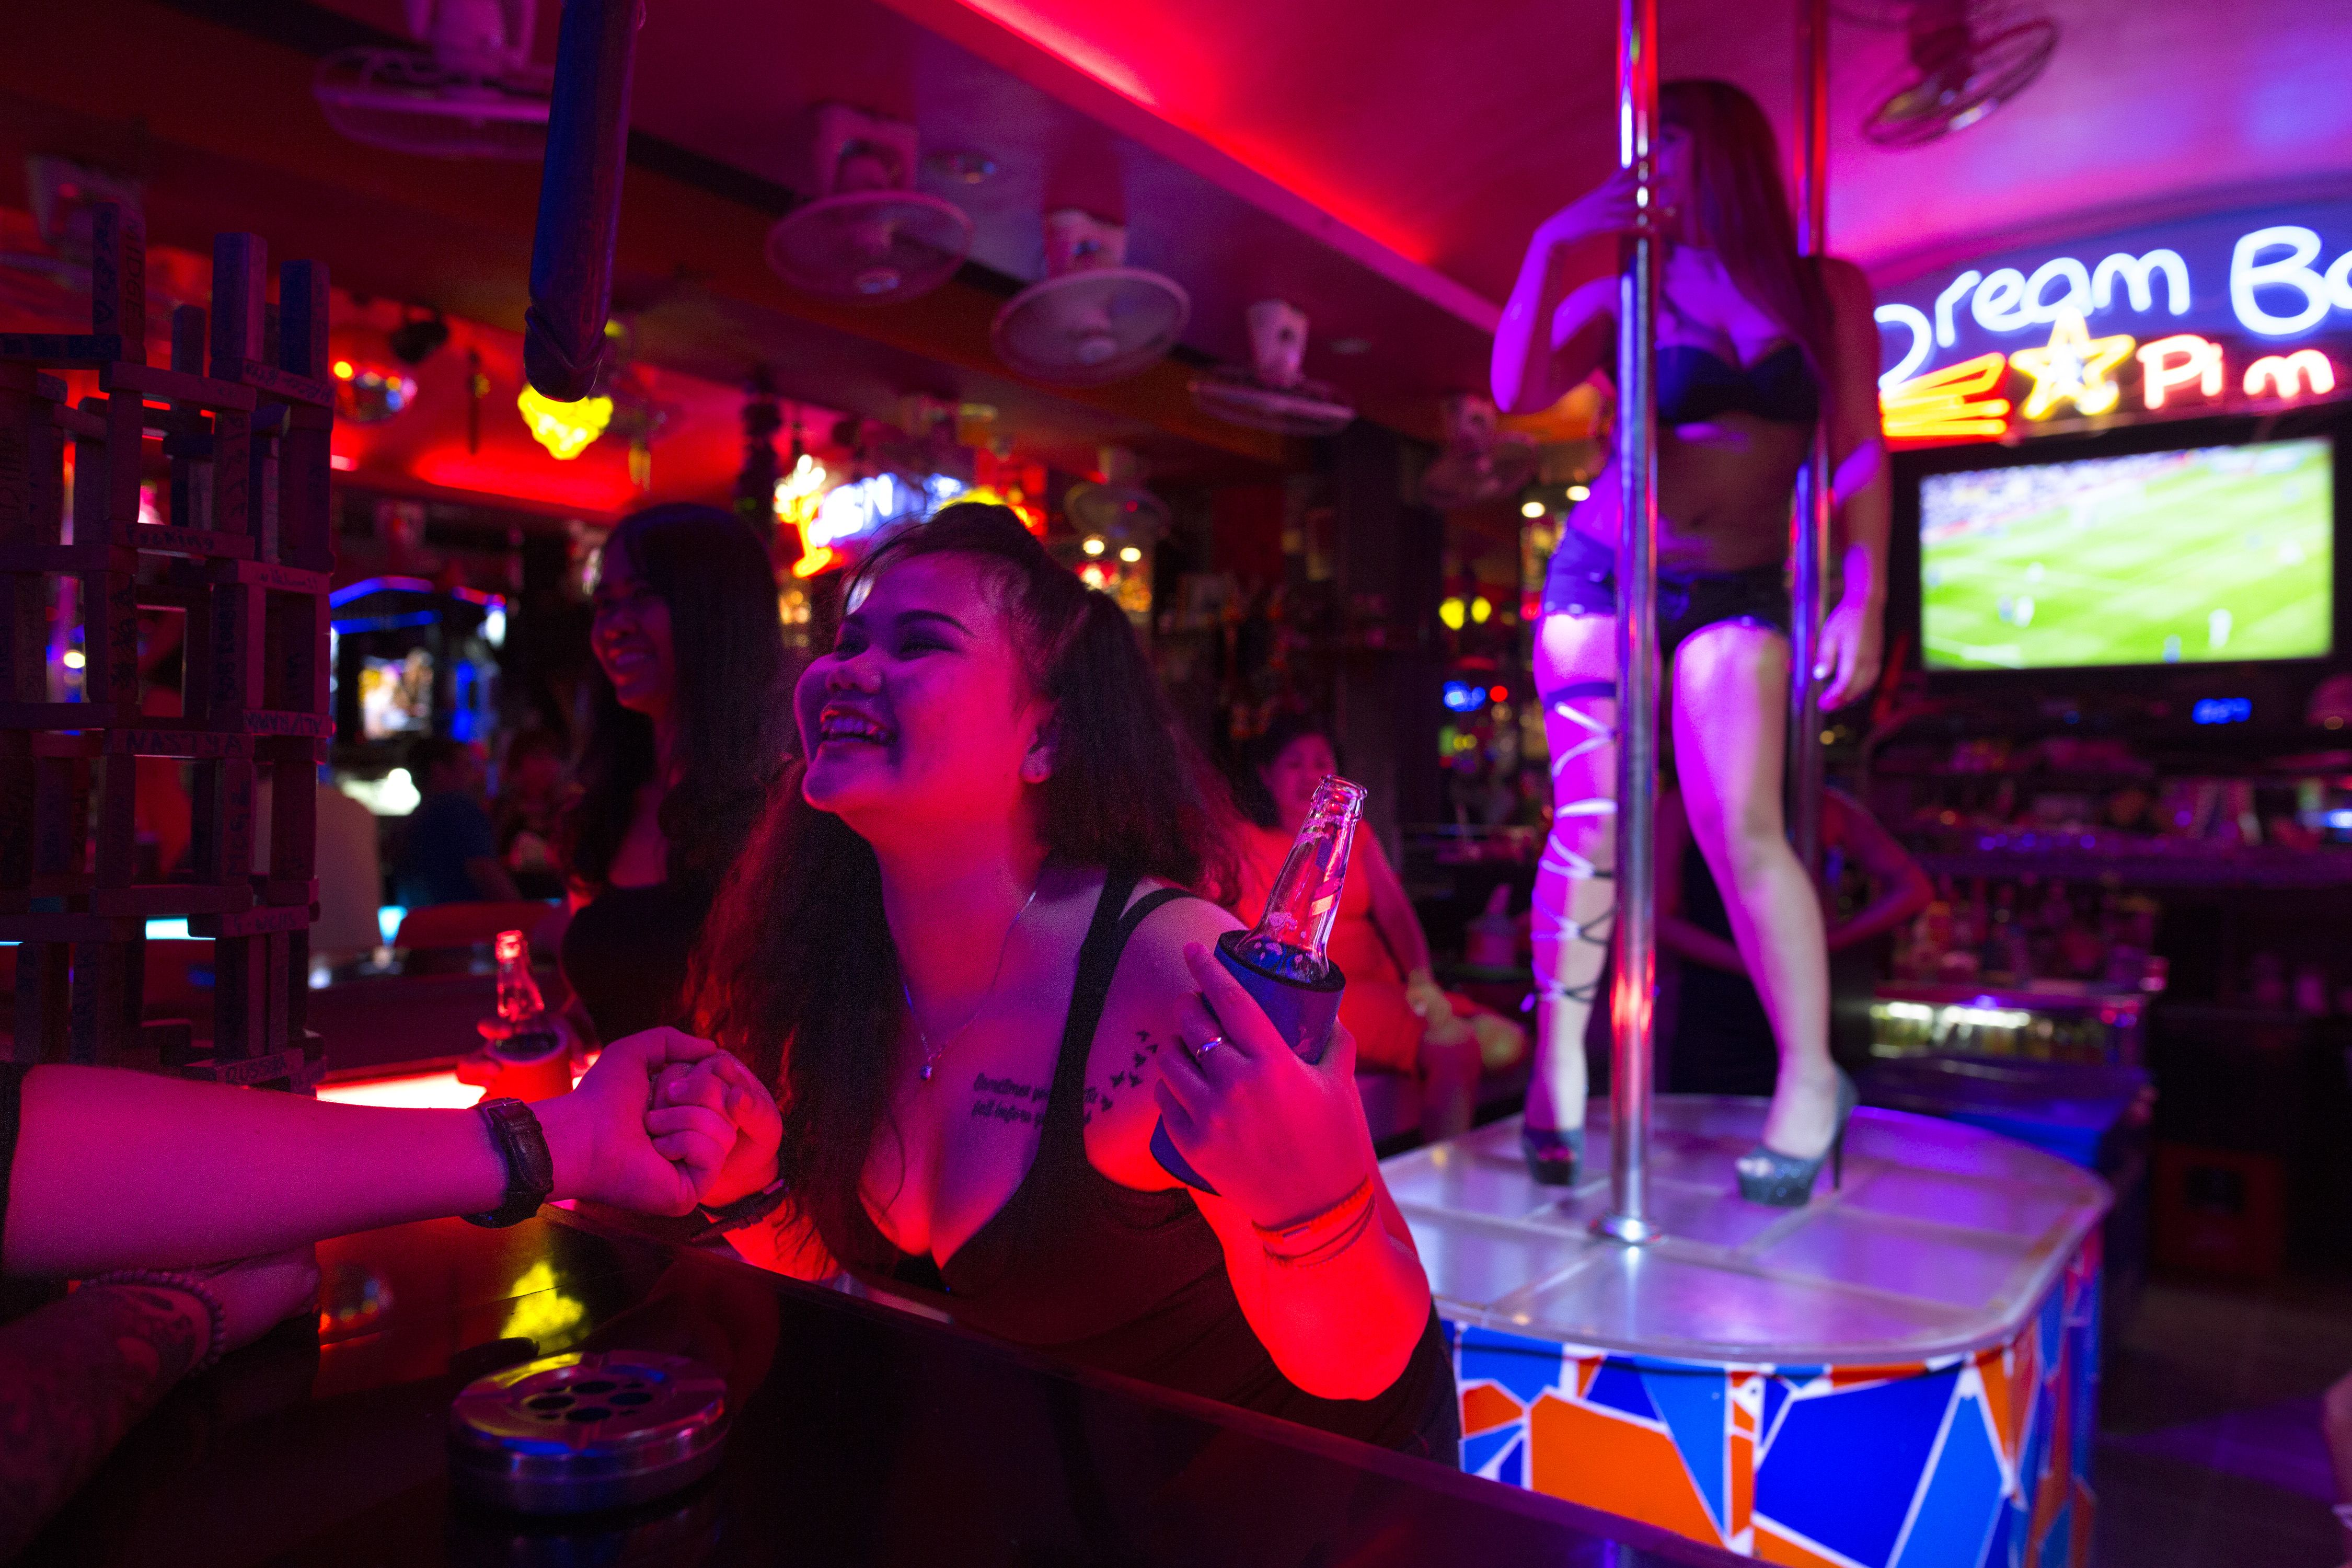 Bangkok Sex Parties Porn - 7 Thailand tourism myths | CNN